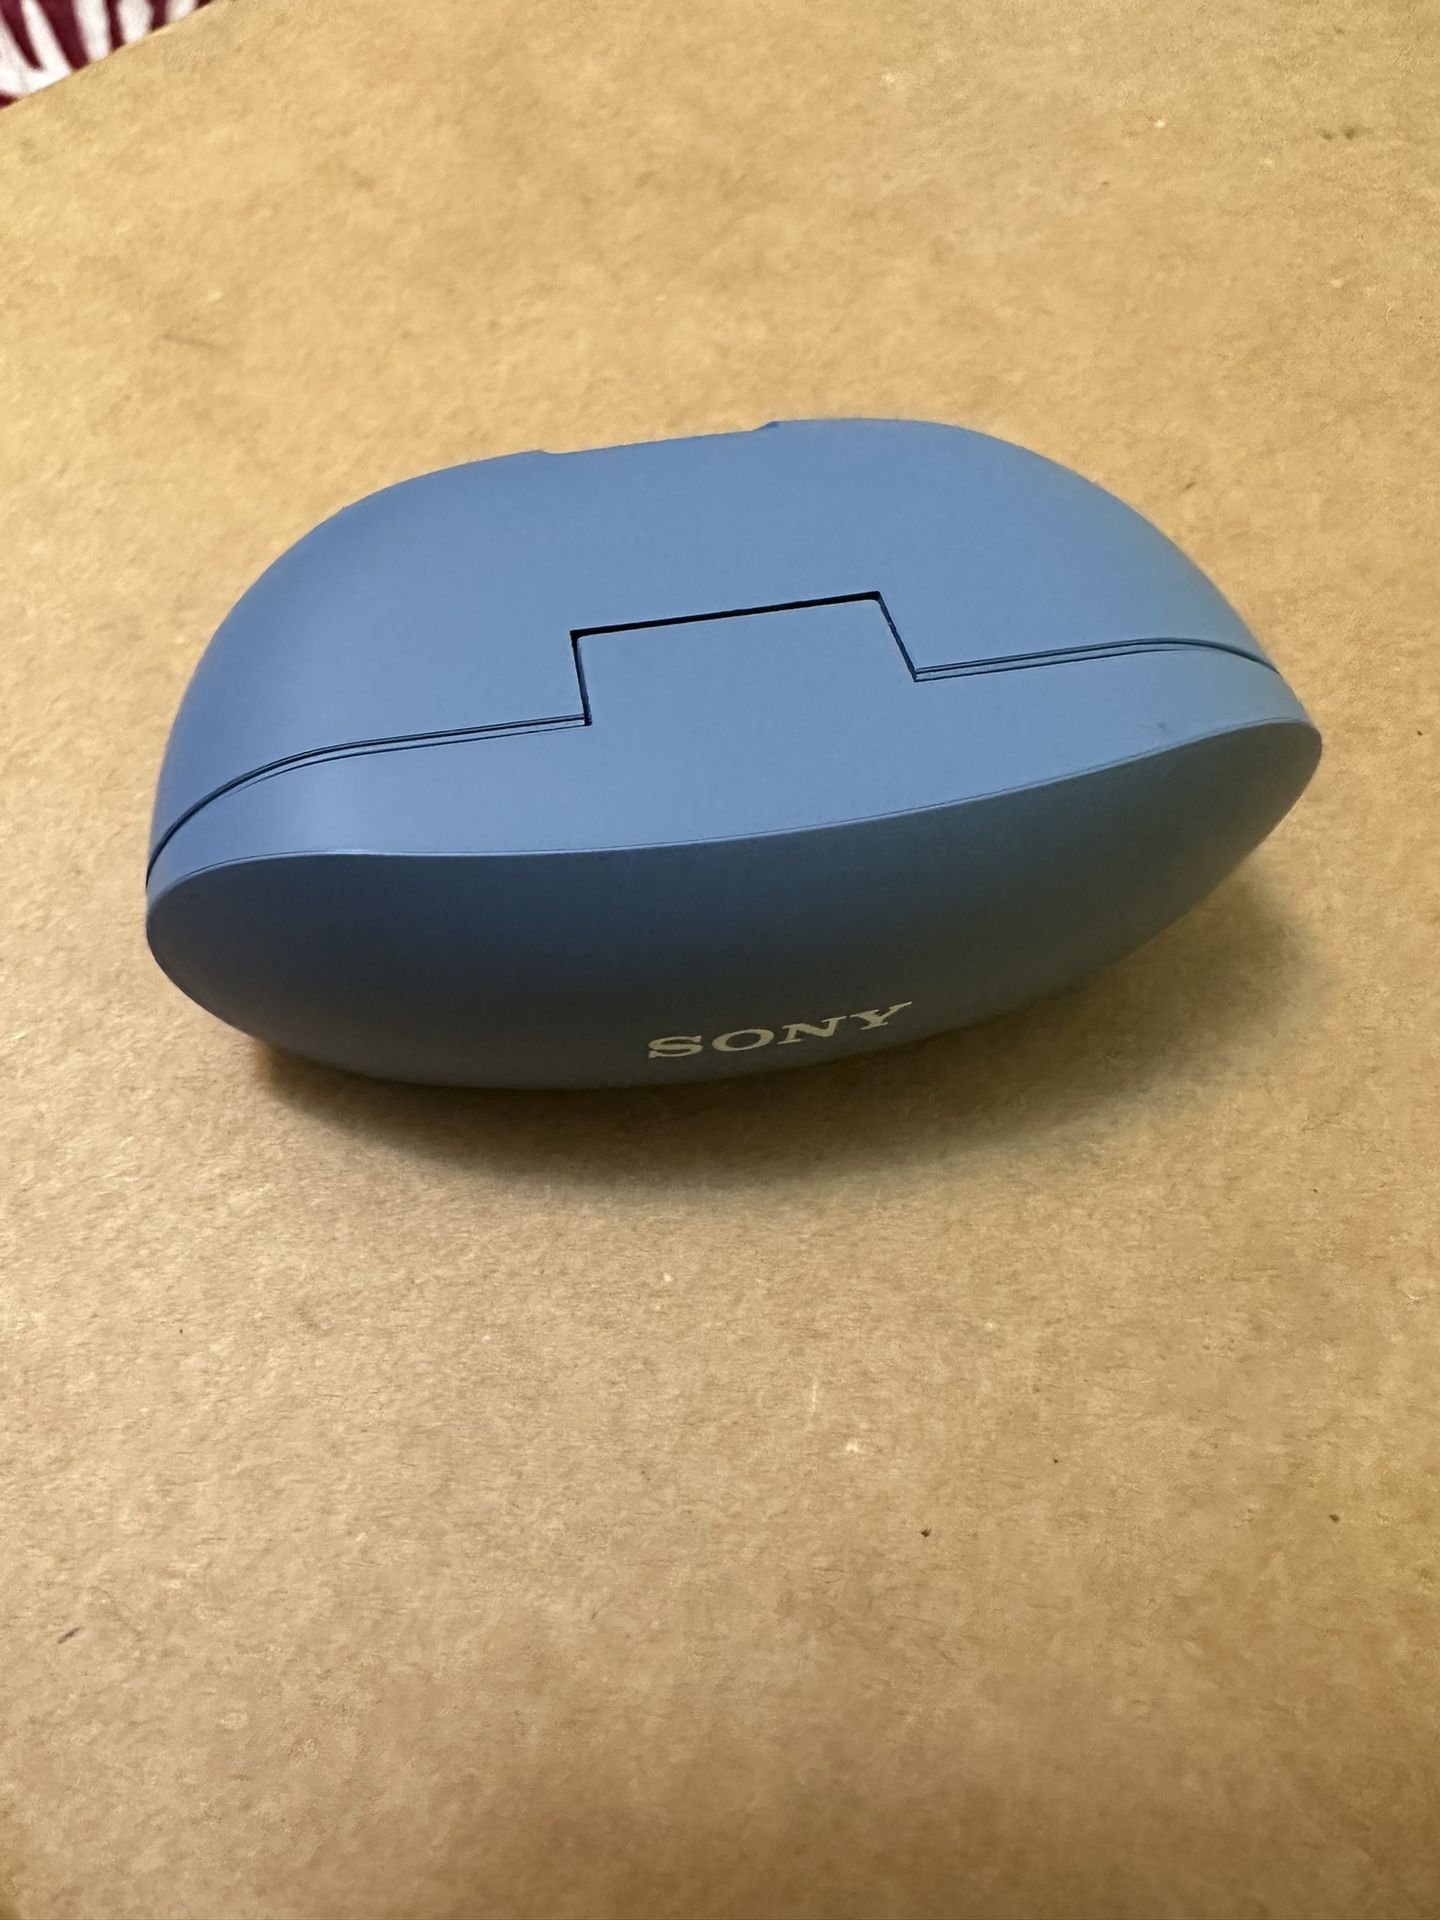 Sony WF-SP800N In-Ear Bluetooth Wireless Headphones Blue TESTED